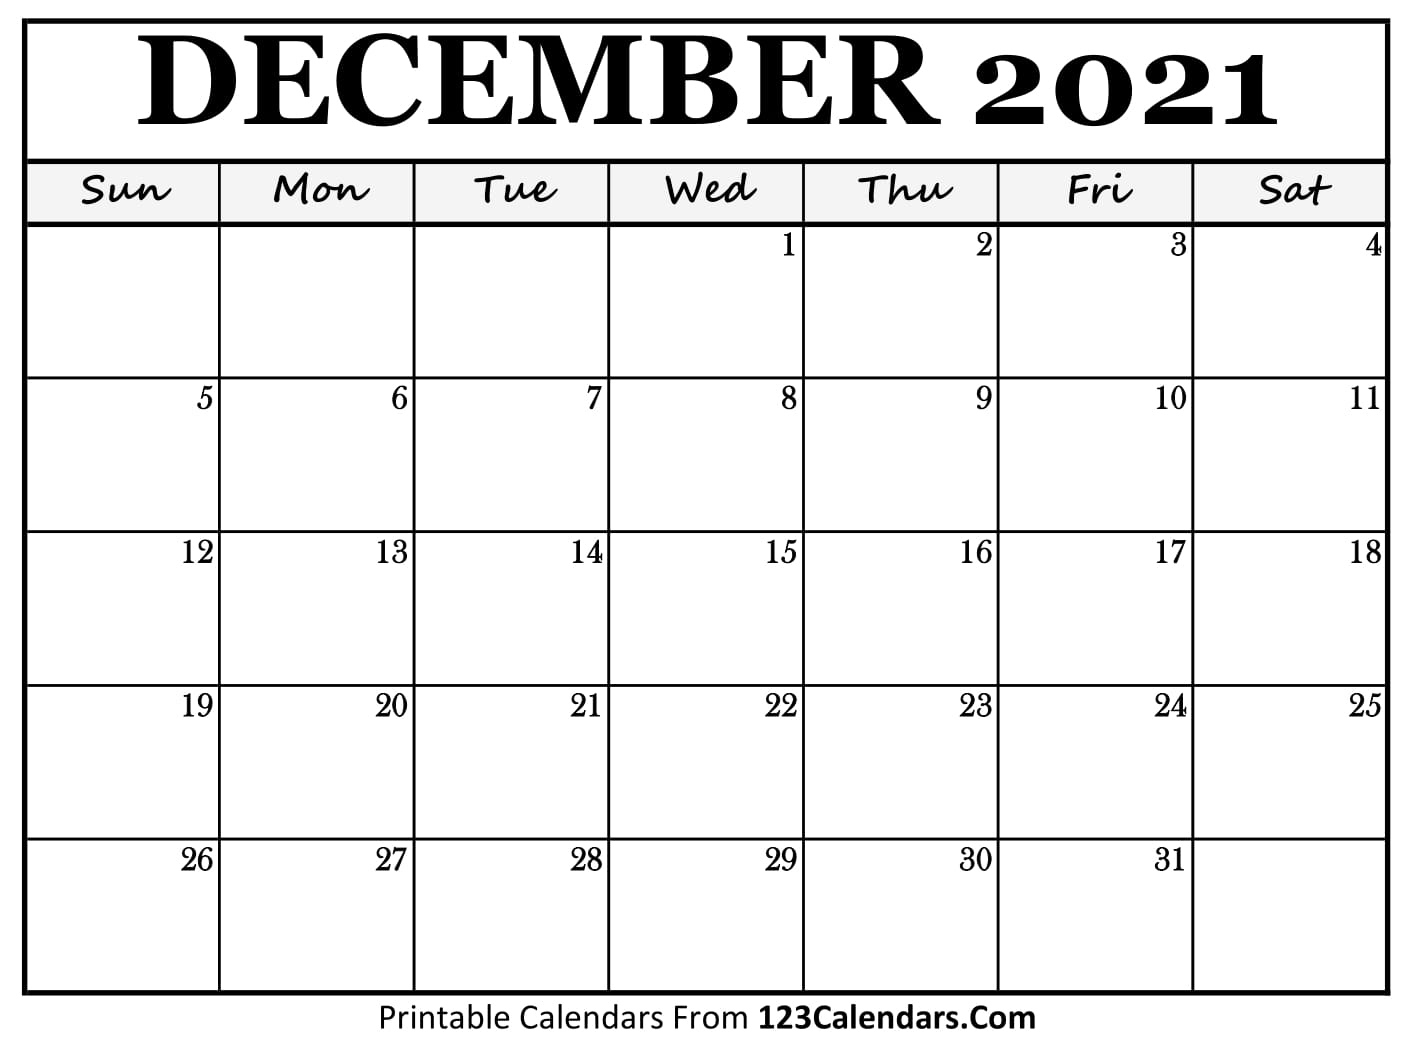 Printable December 2021 Calendar Templates - 123Calendars December 2021 Blank Calendar